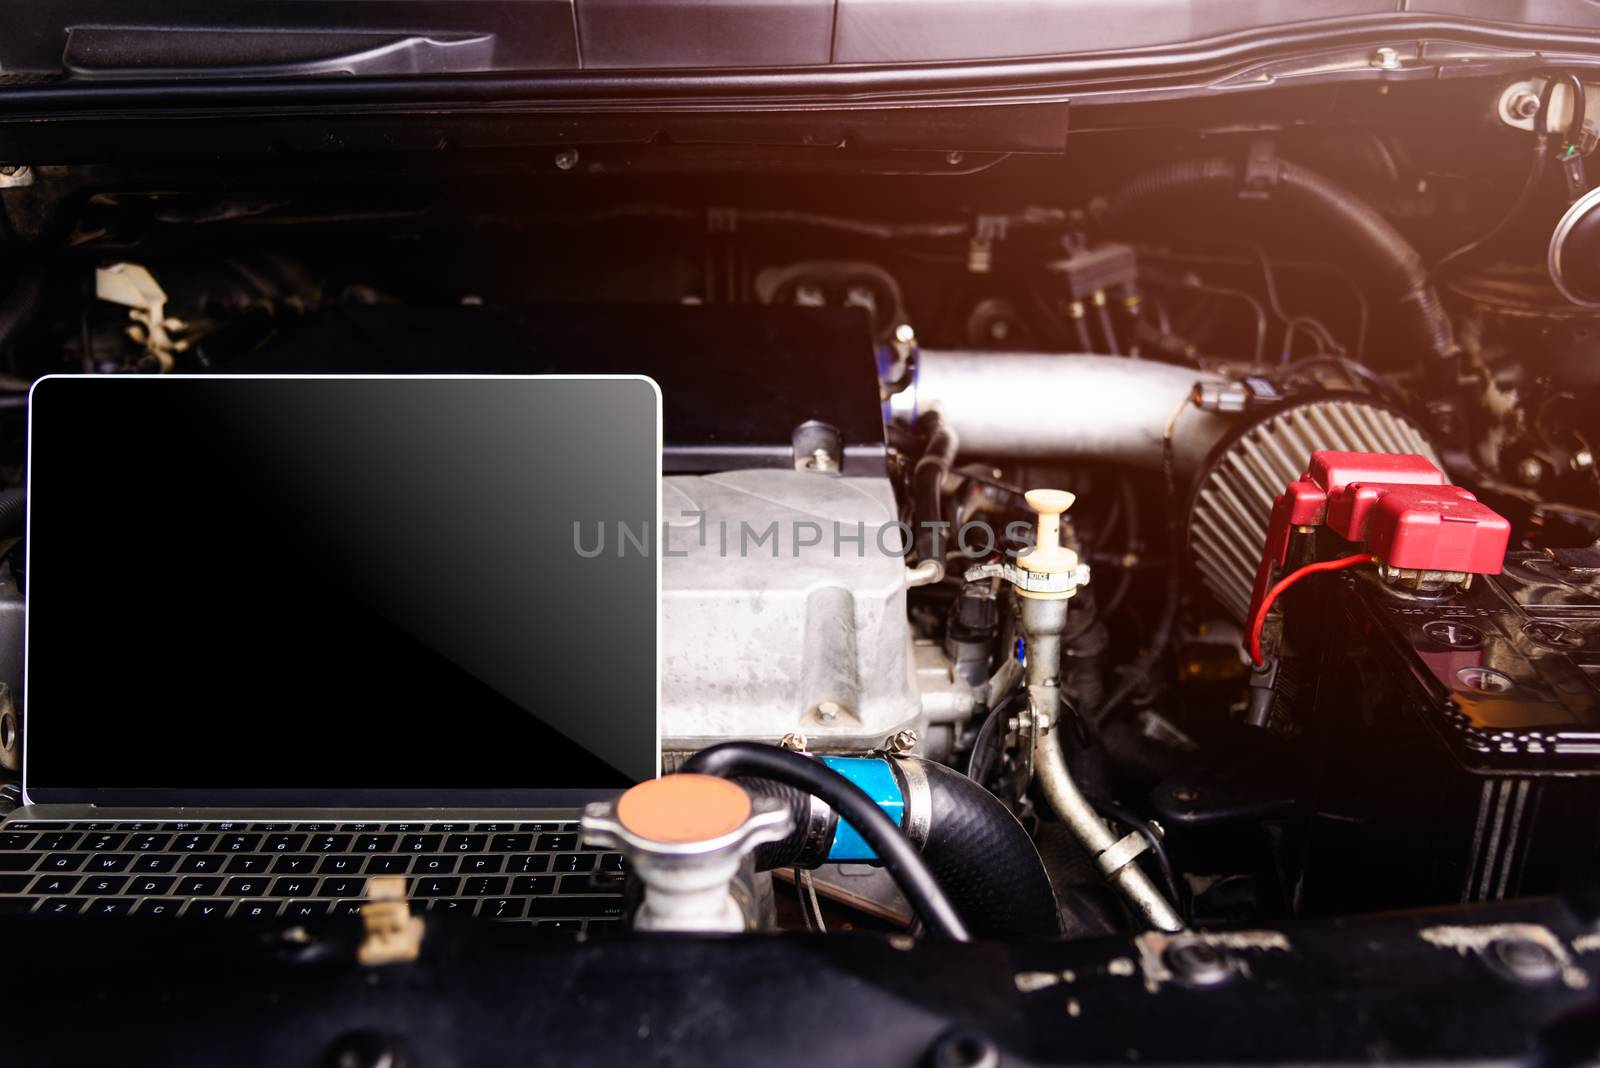 Laptop computer on car mechanic engine for service by Sorapop